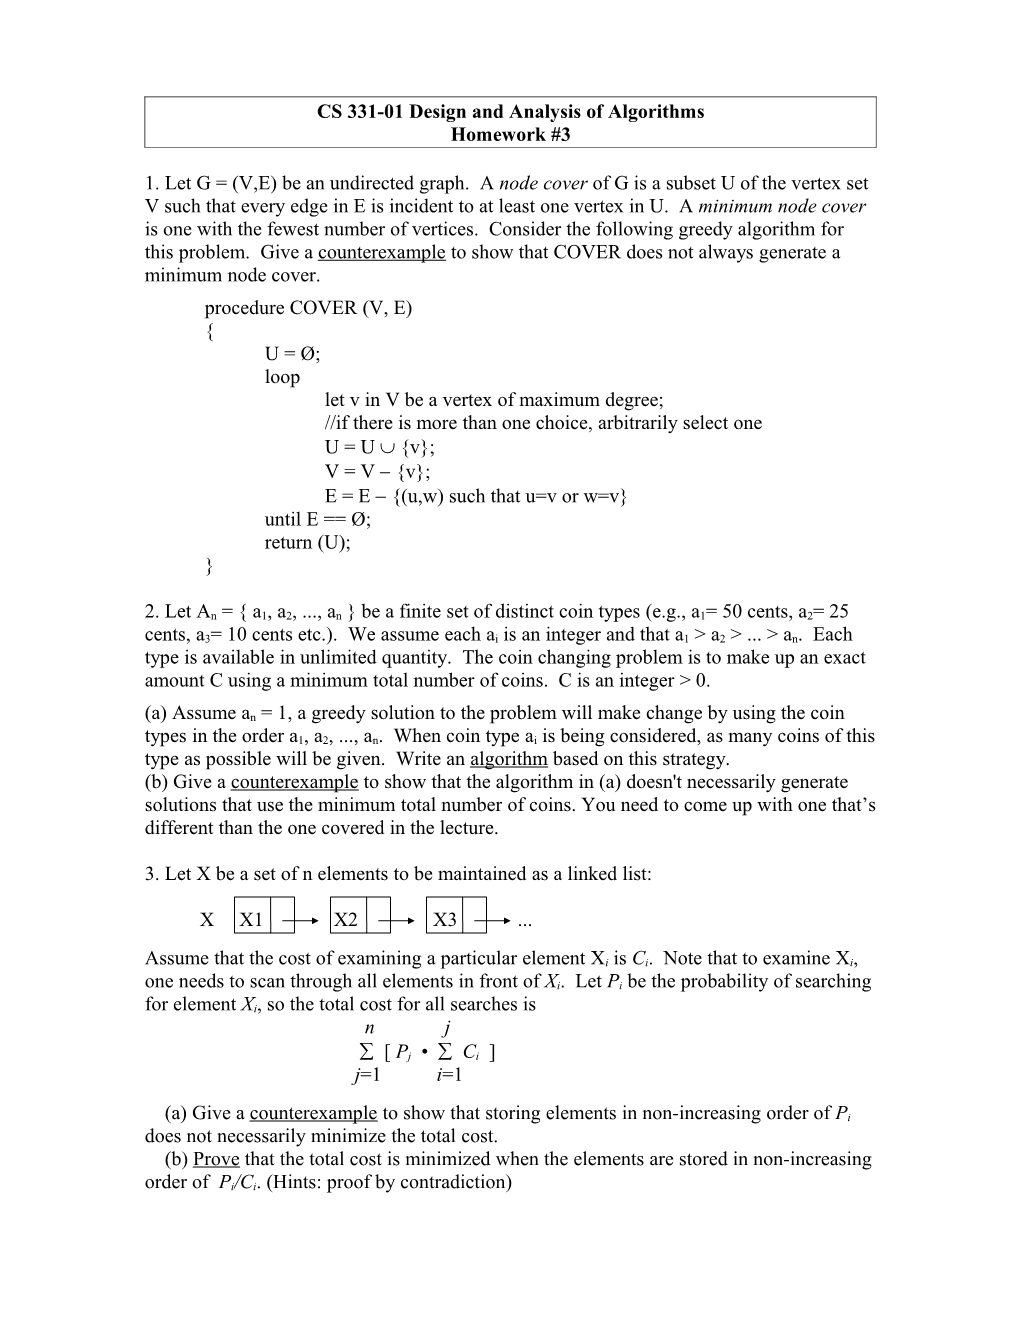 CS 530 Advanced Algorithm Design and Analysis